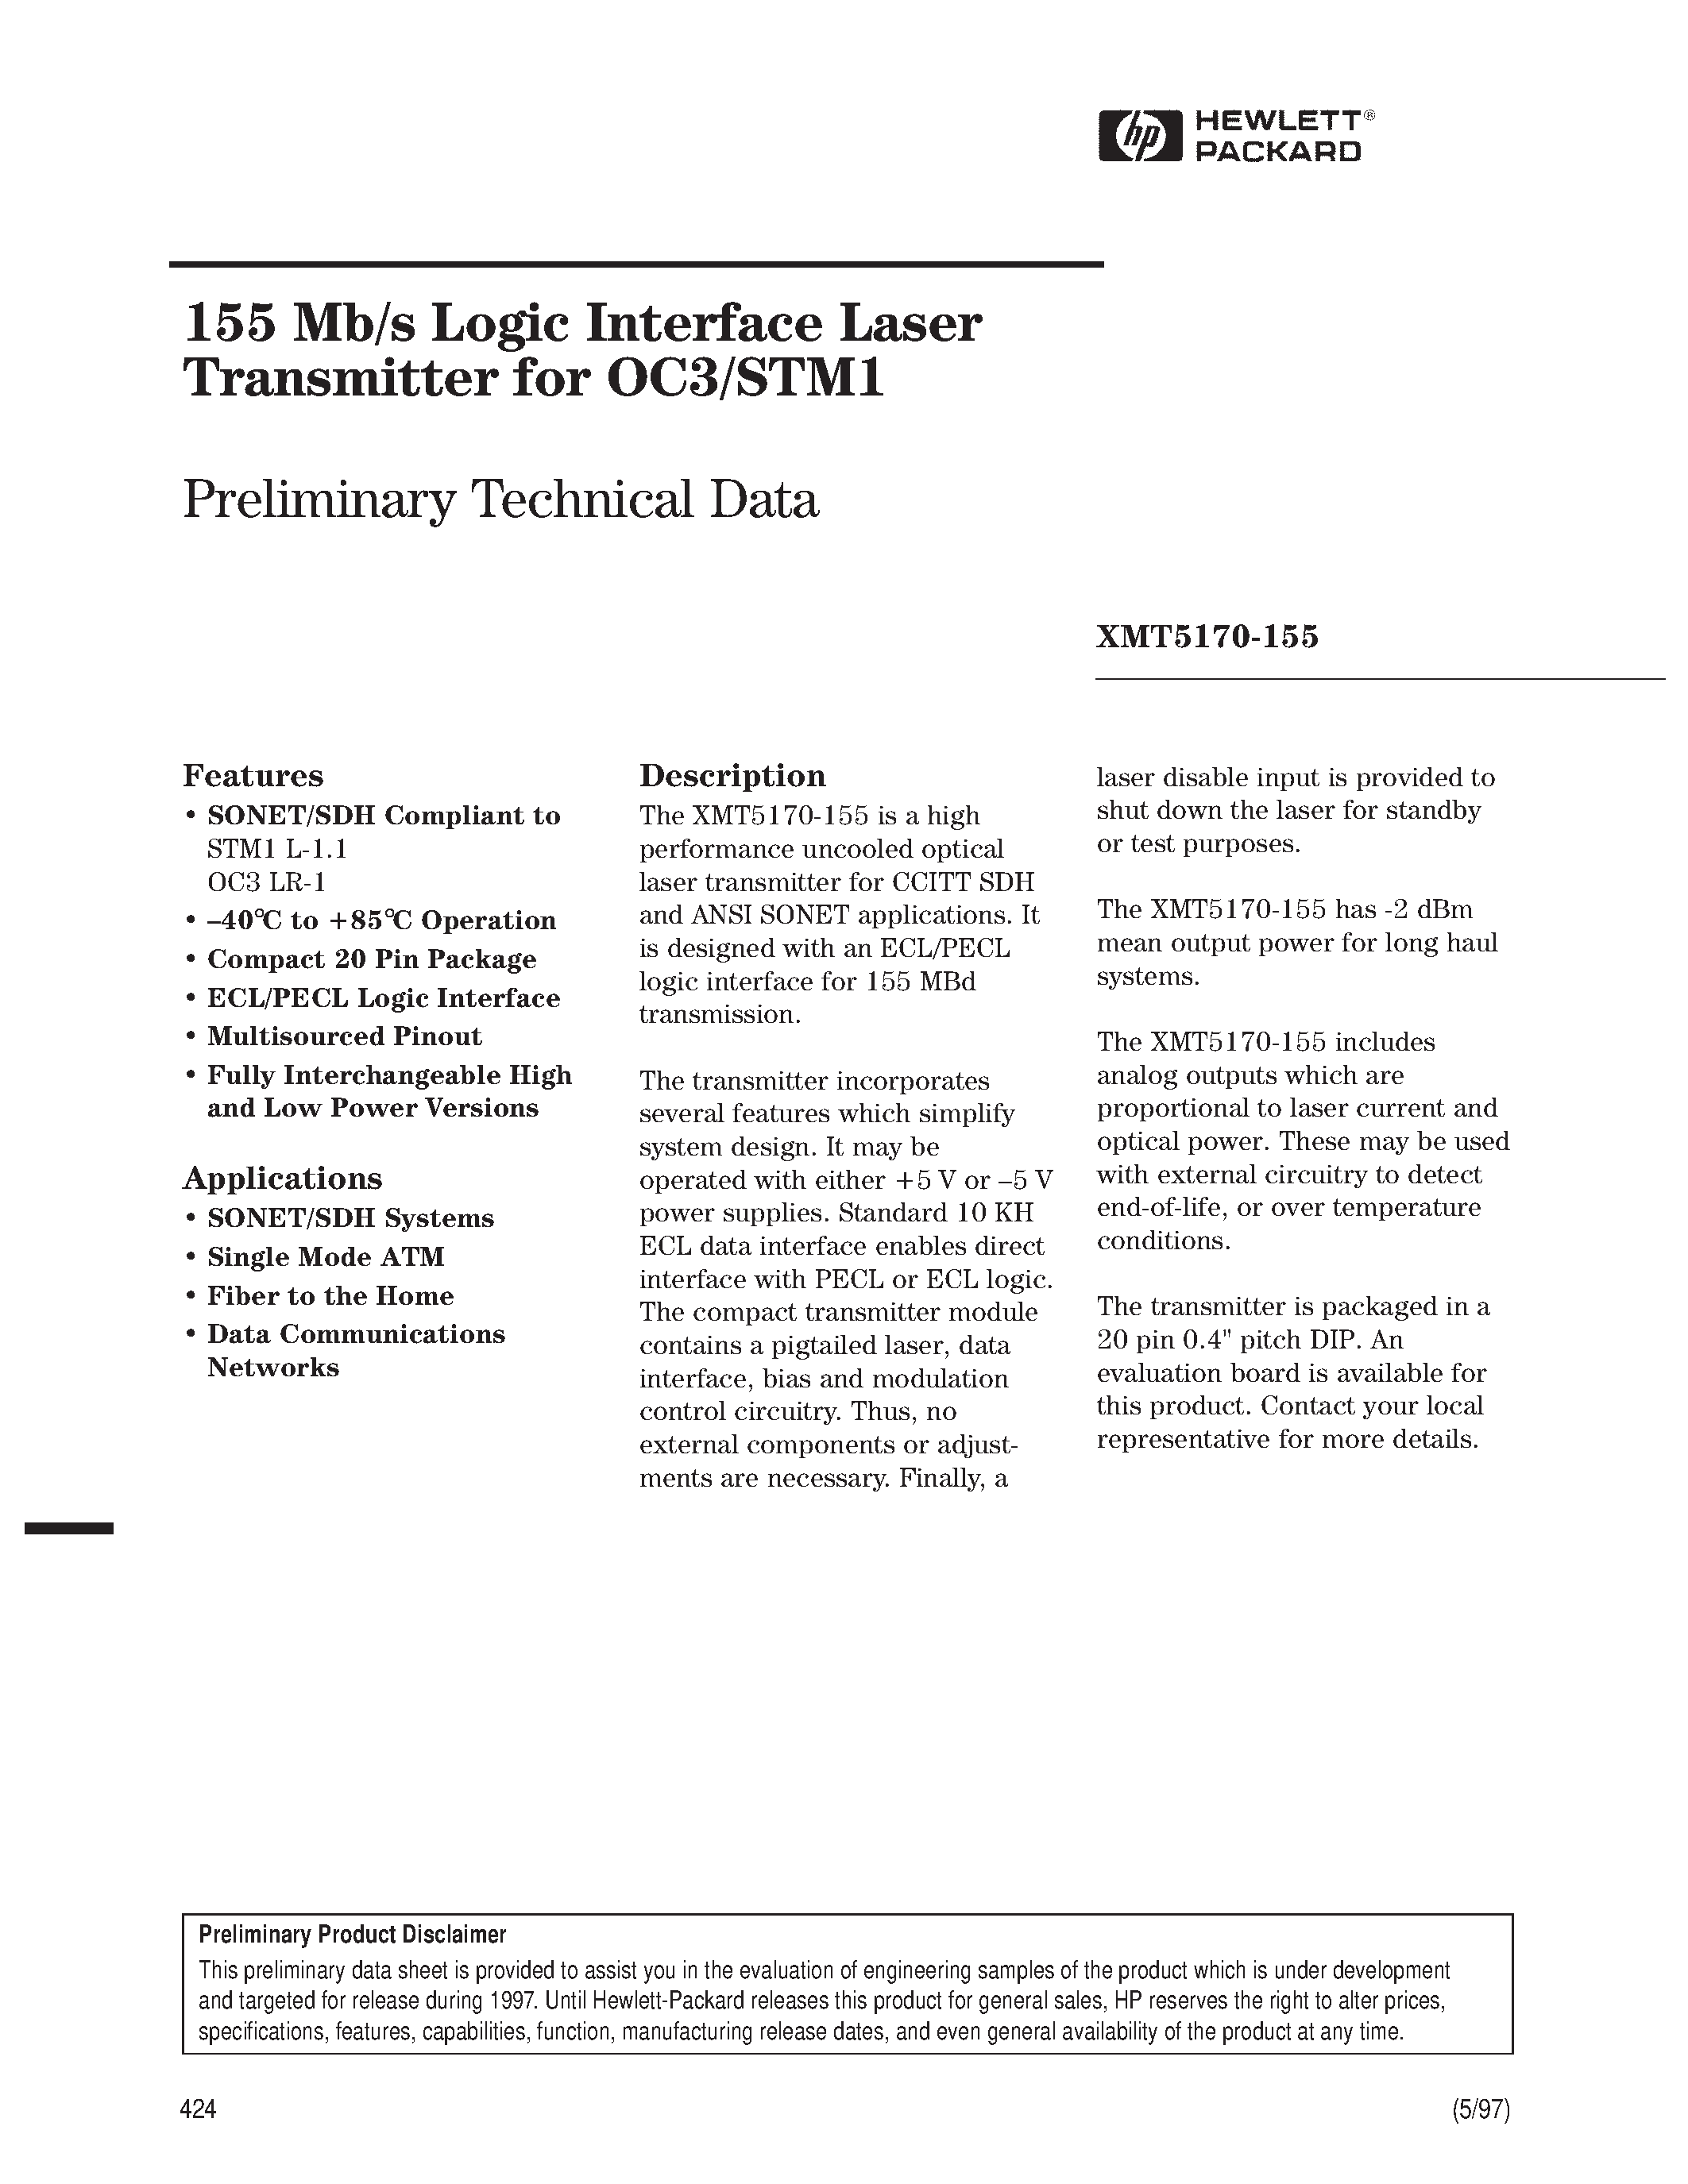 Datasheet XMT5170A-155-ST - 155 Mb/s Logic Interface Laser Transmitter for OC3/STM1 page 1